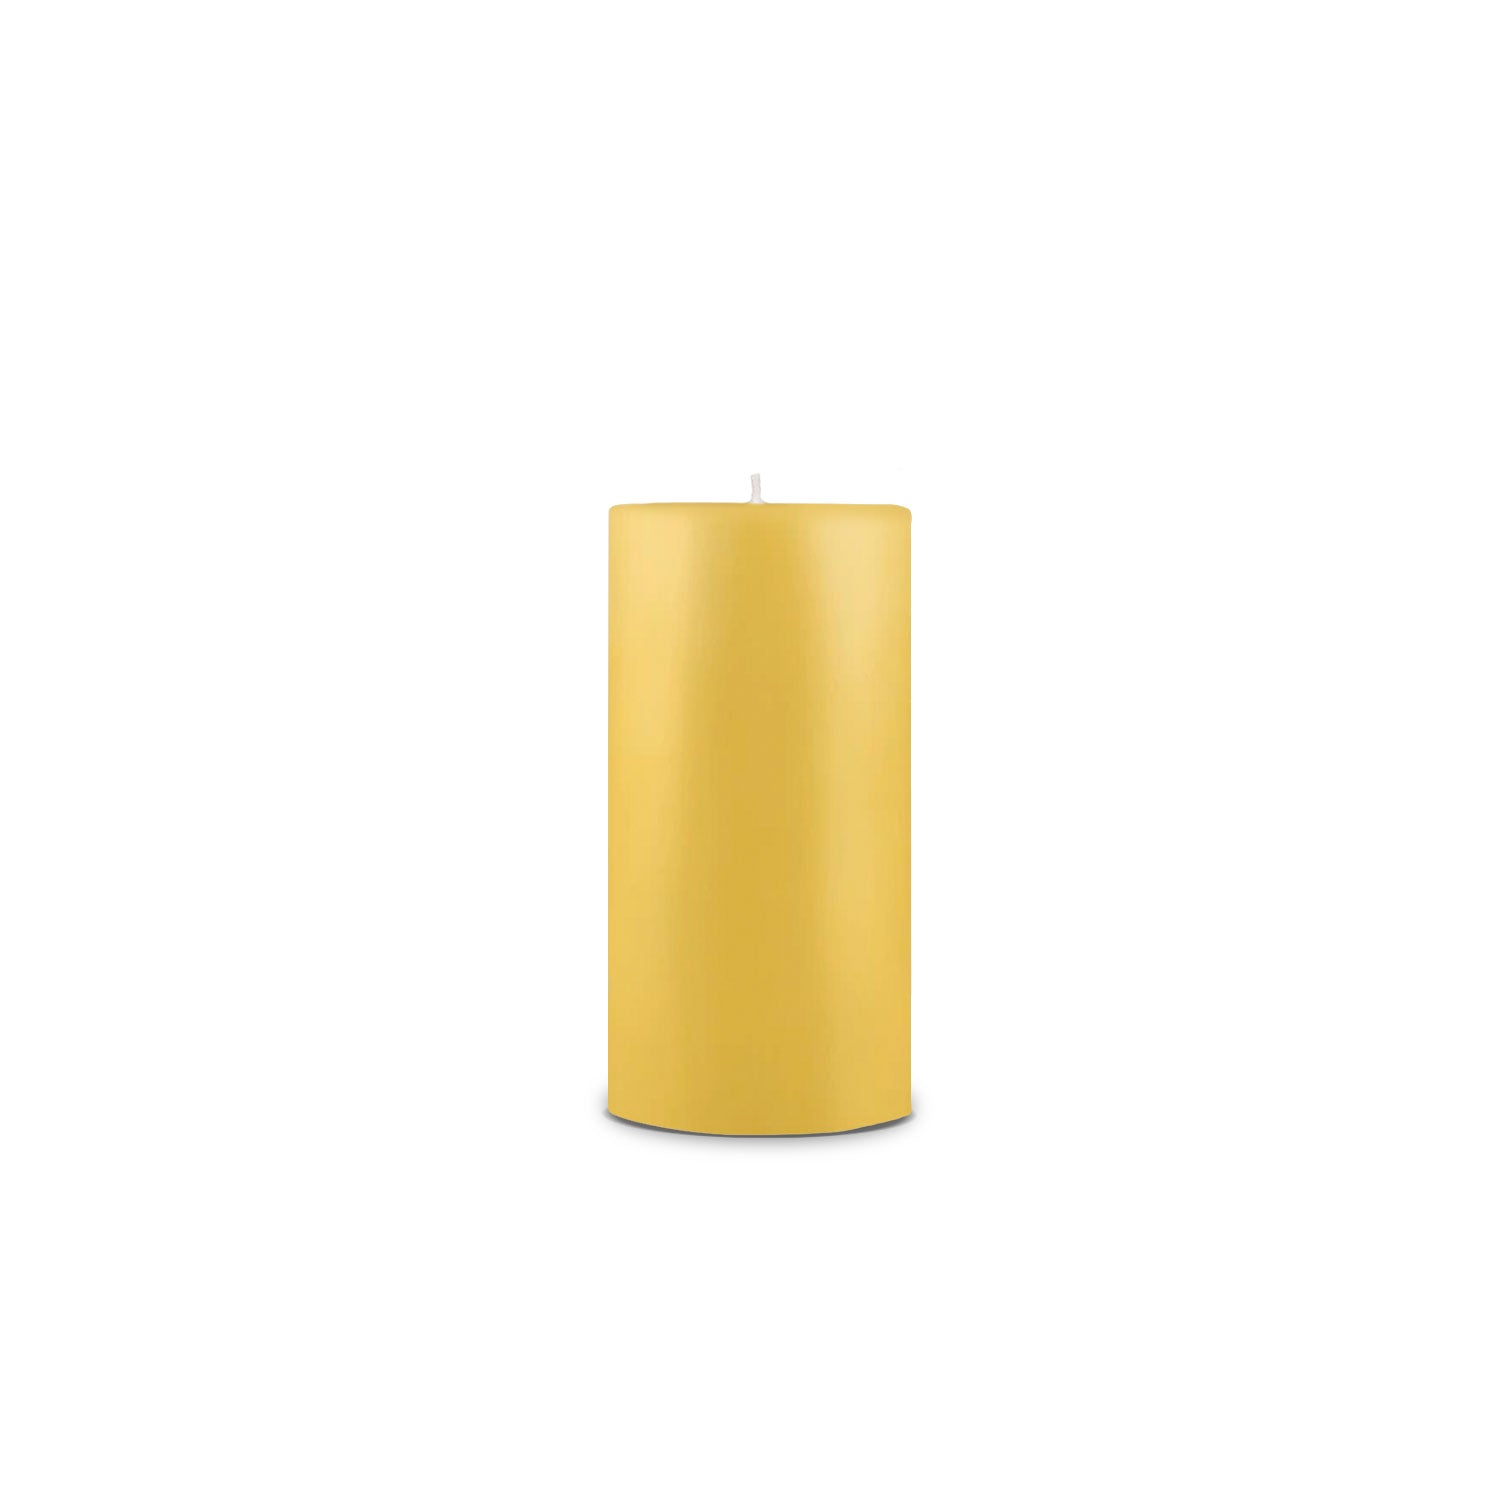 2"x3" Petite Pillar Candle - honey suckle